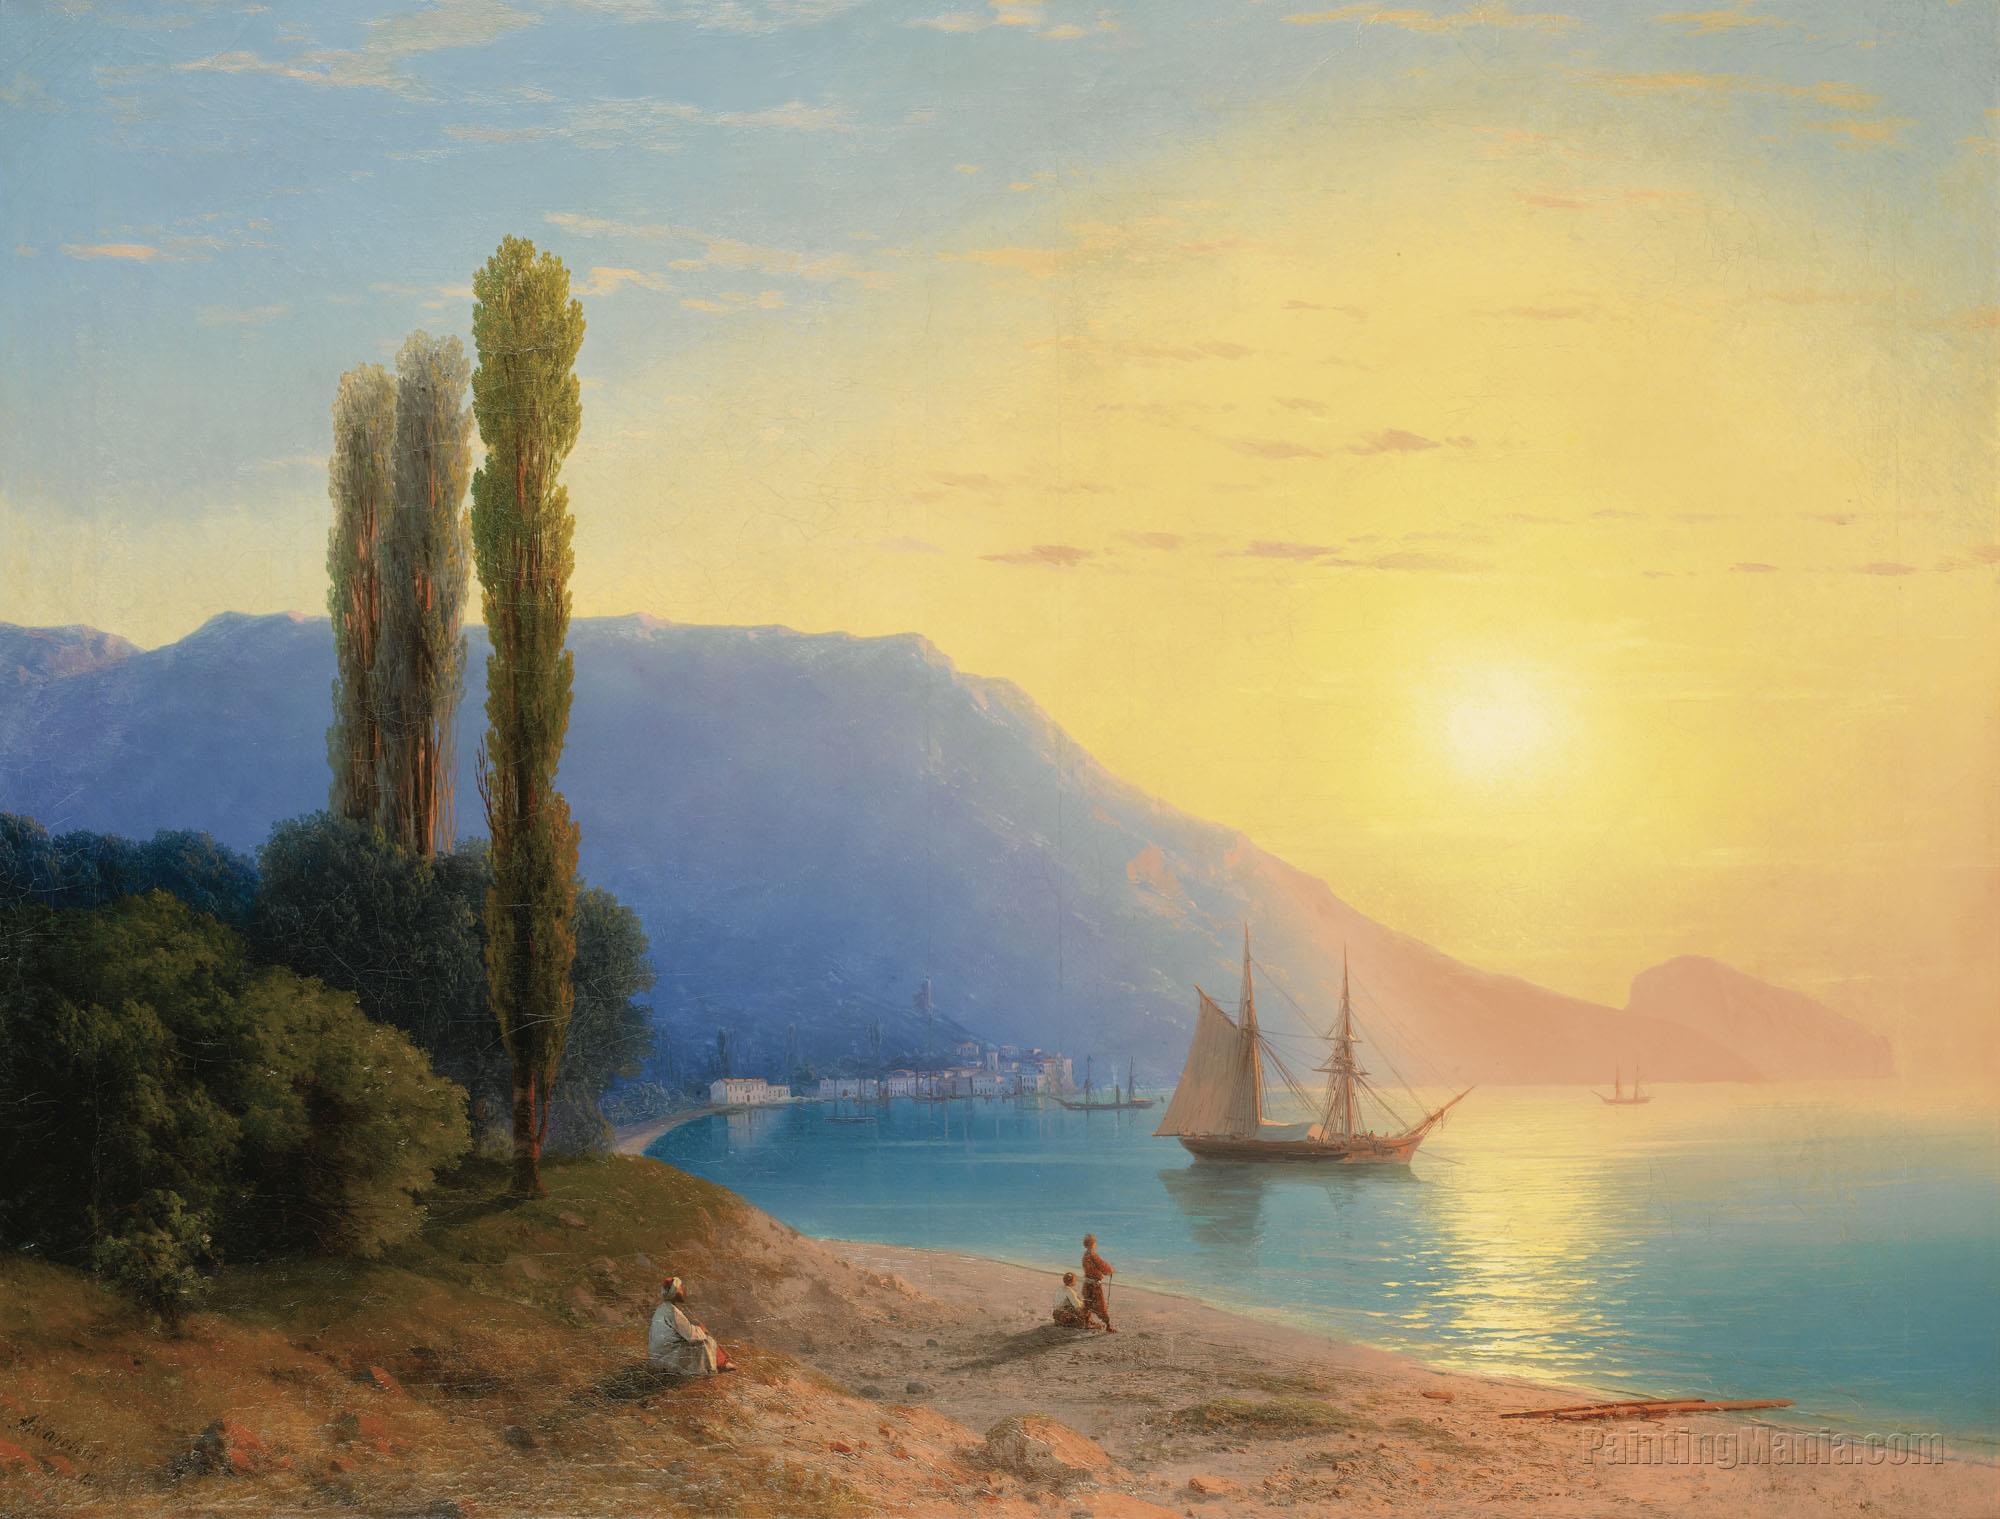 Sunset over Yalta